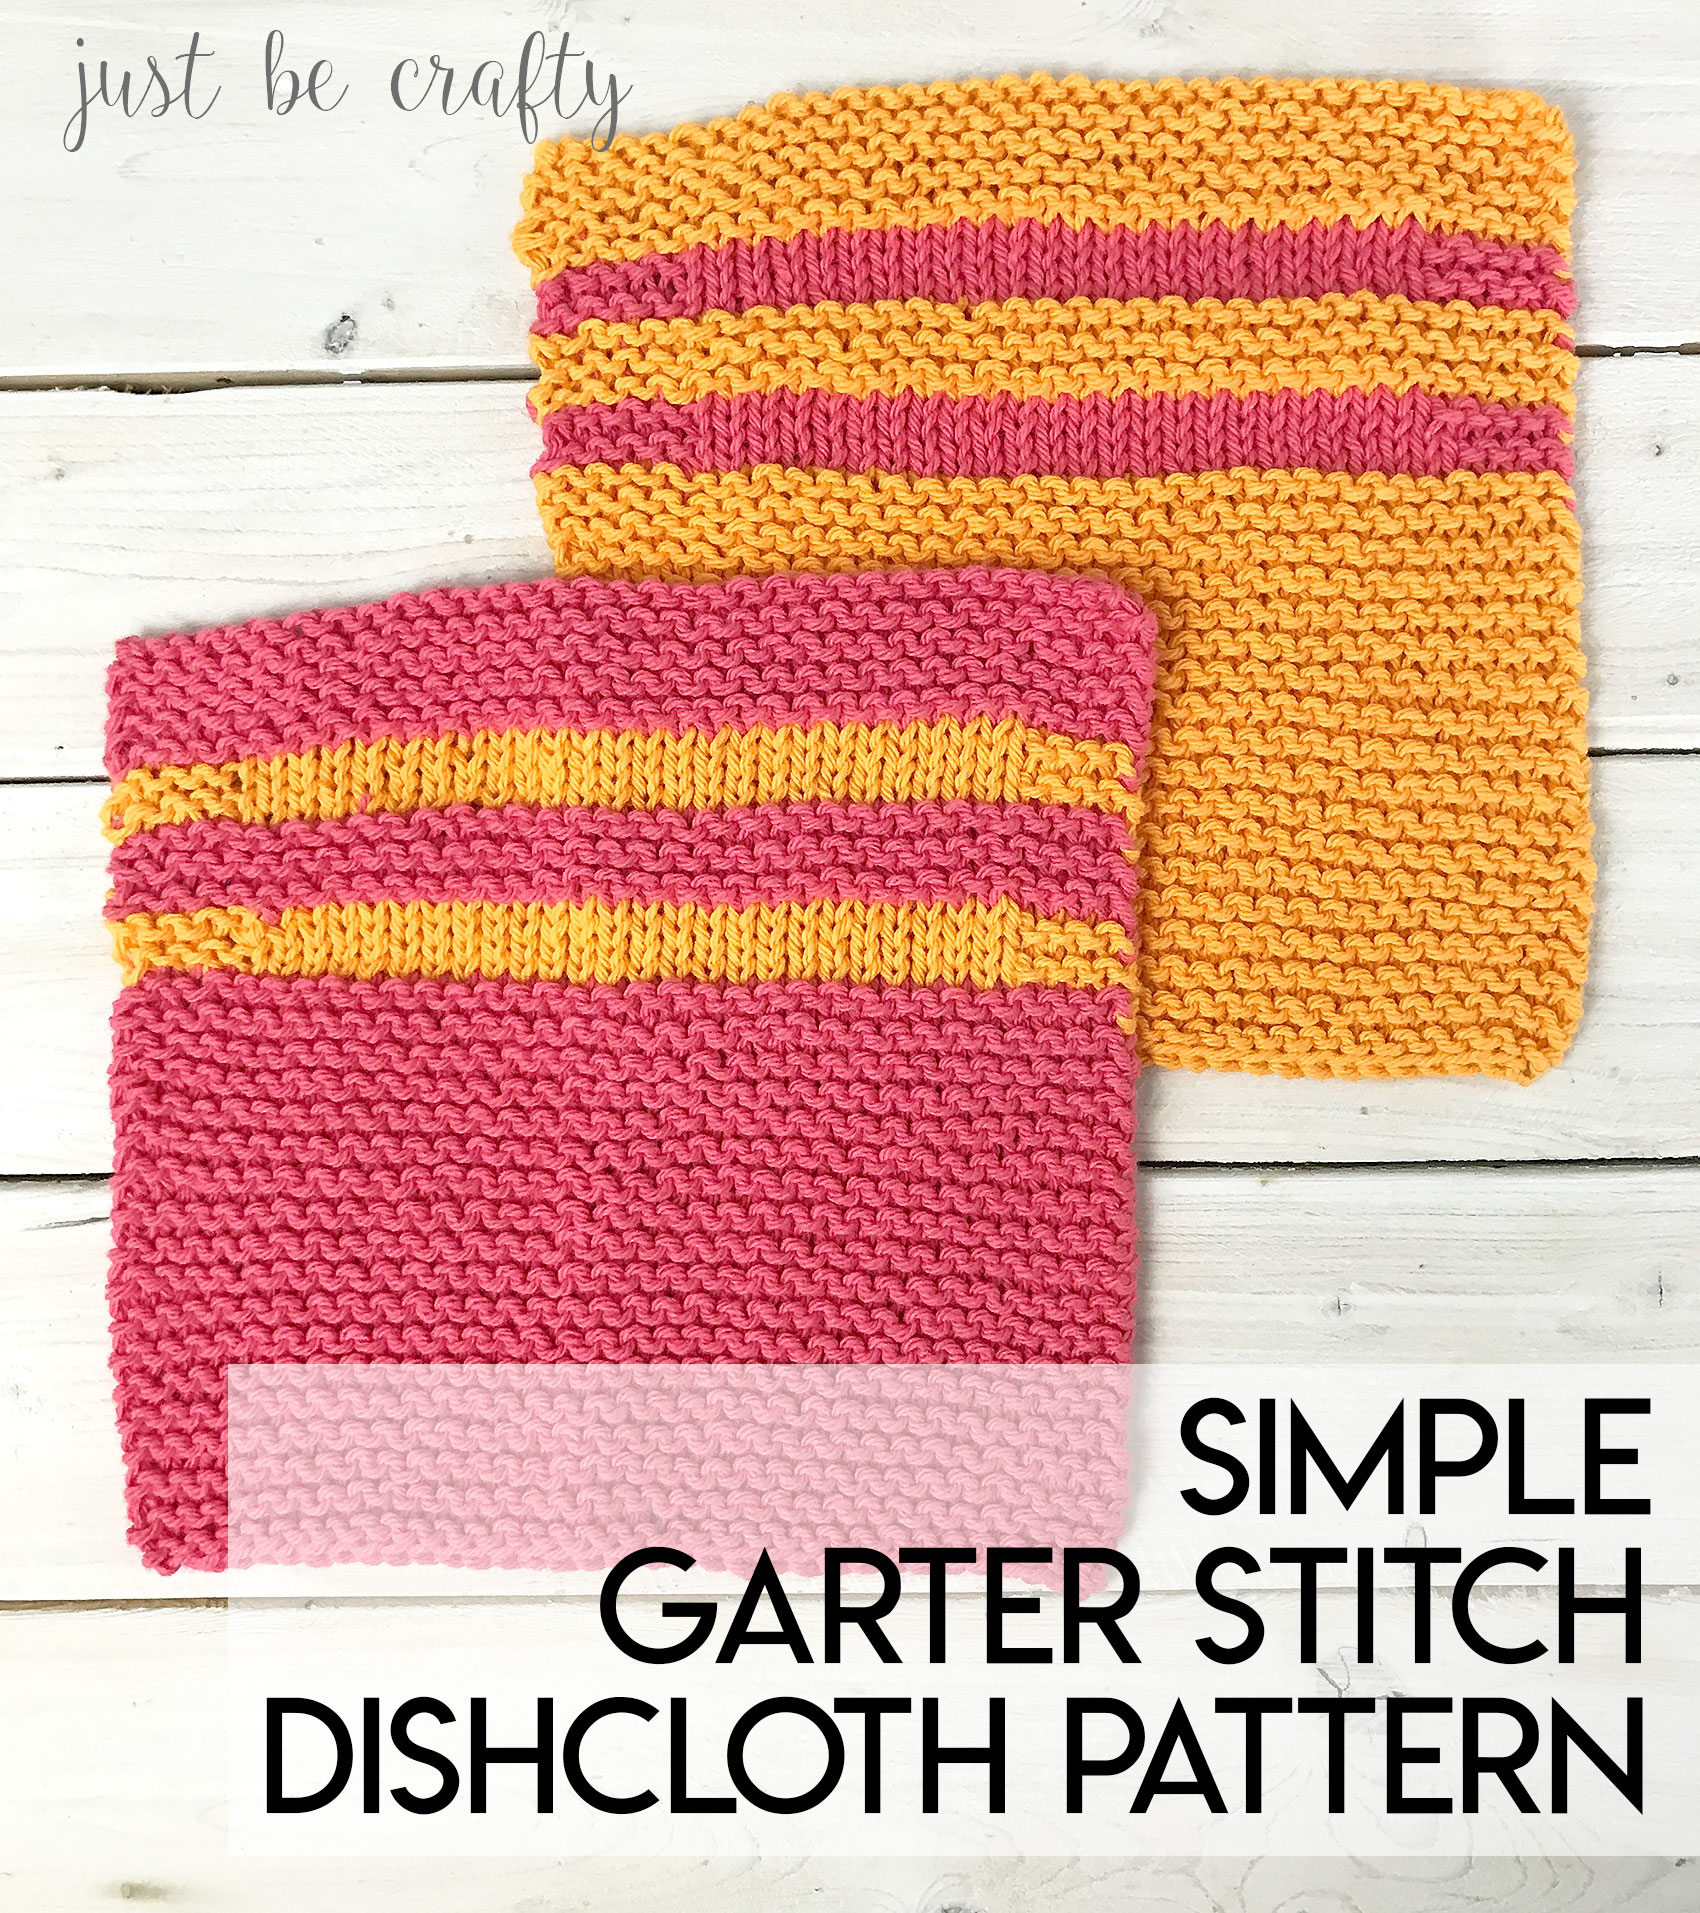 Simple Garter Stitch Dishcloth Pattern